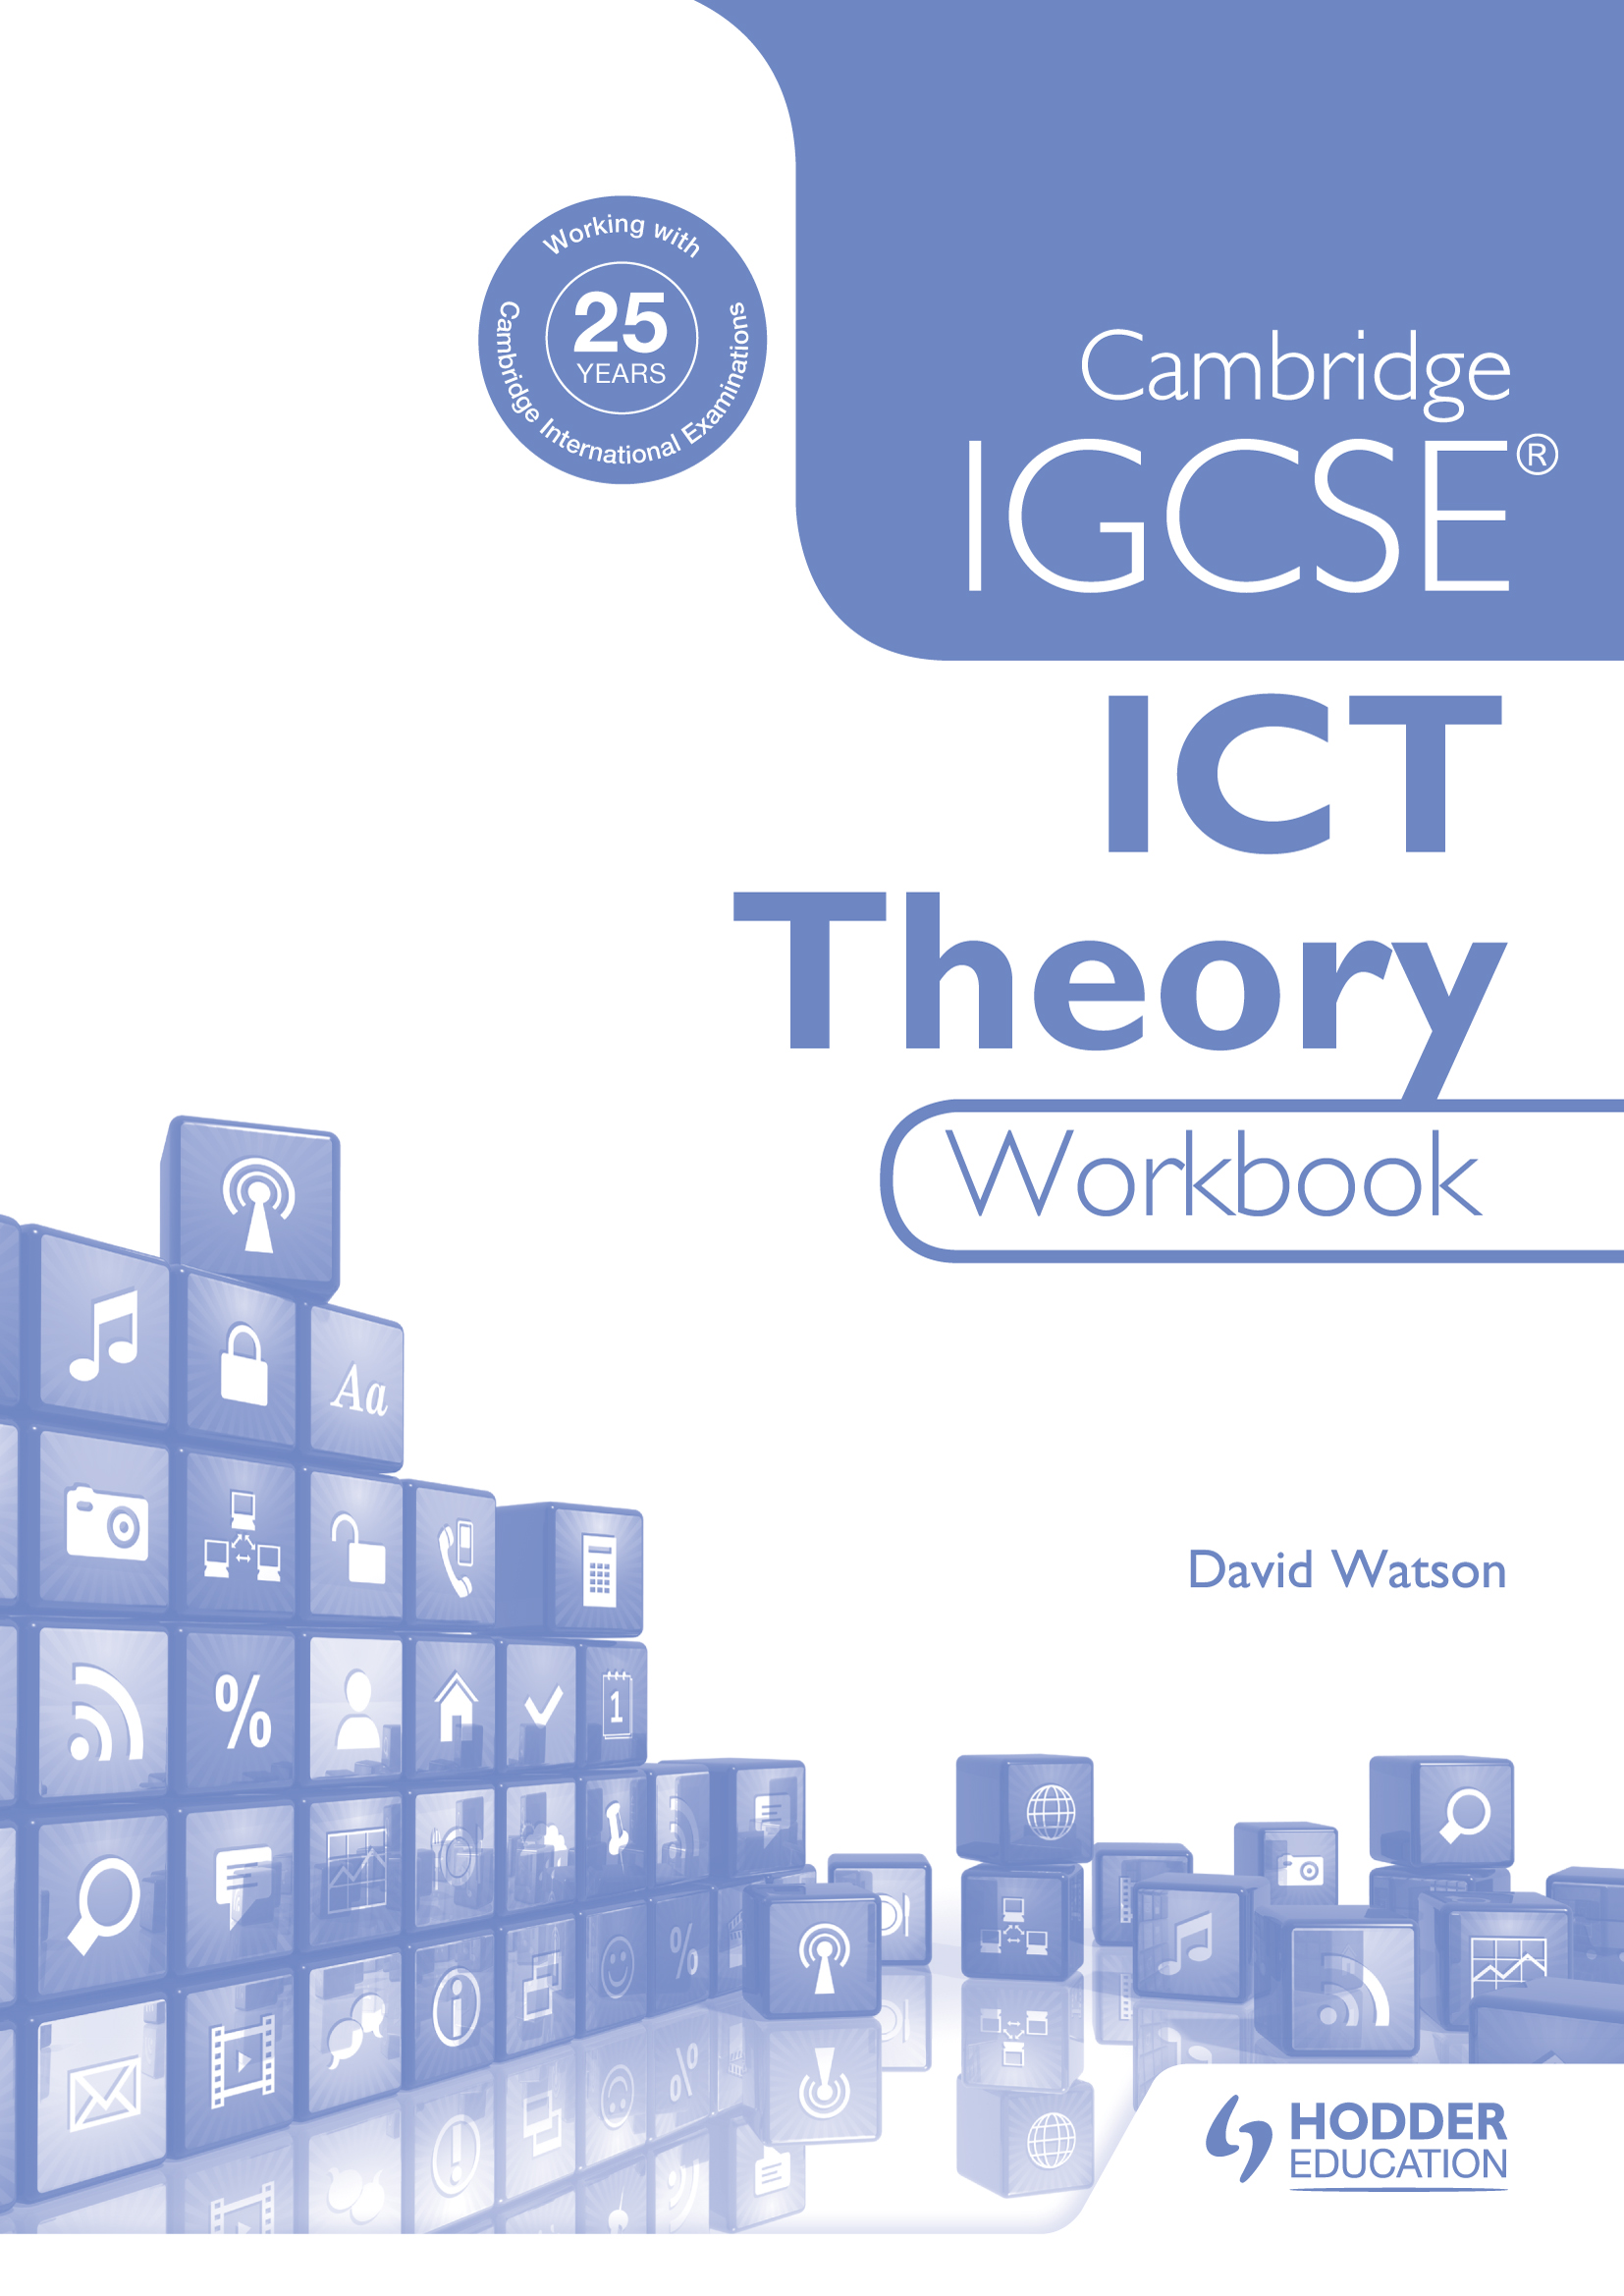 Cambridge IGCSE ICT Theory Workbook